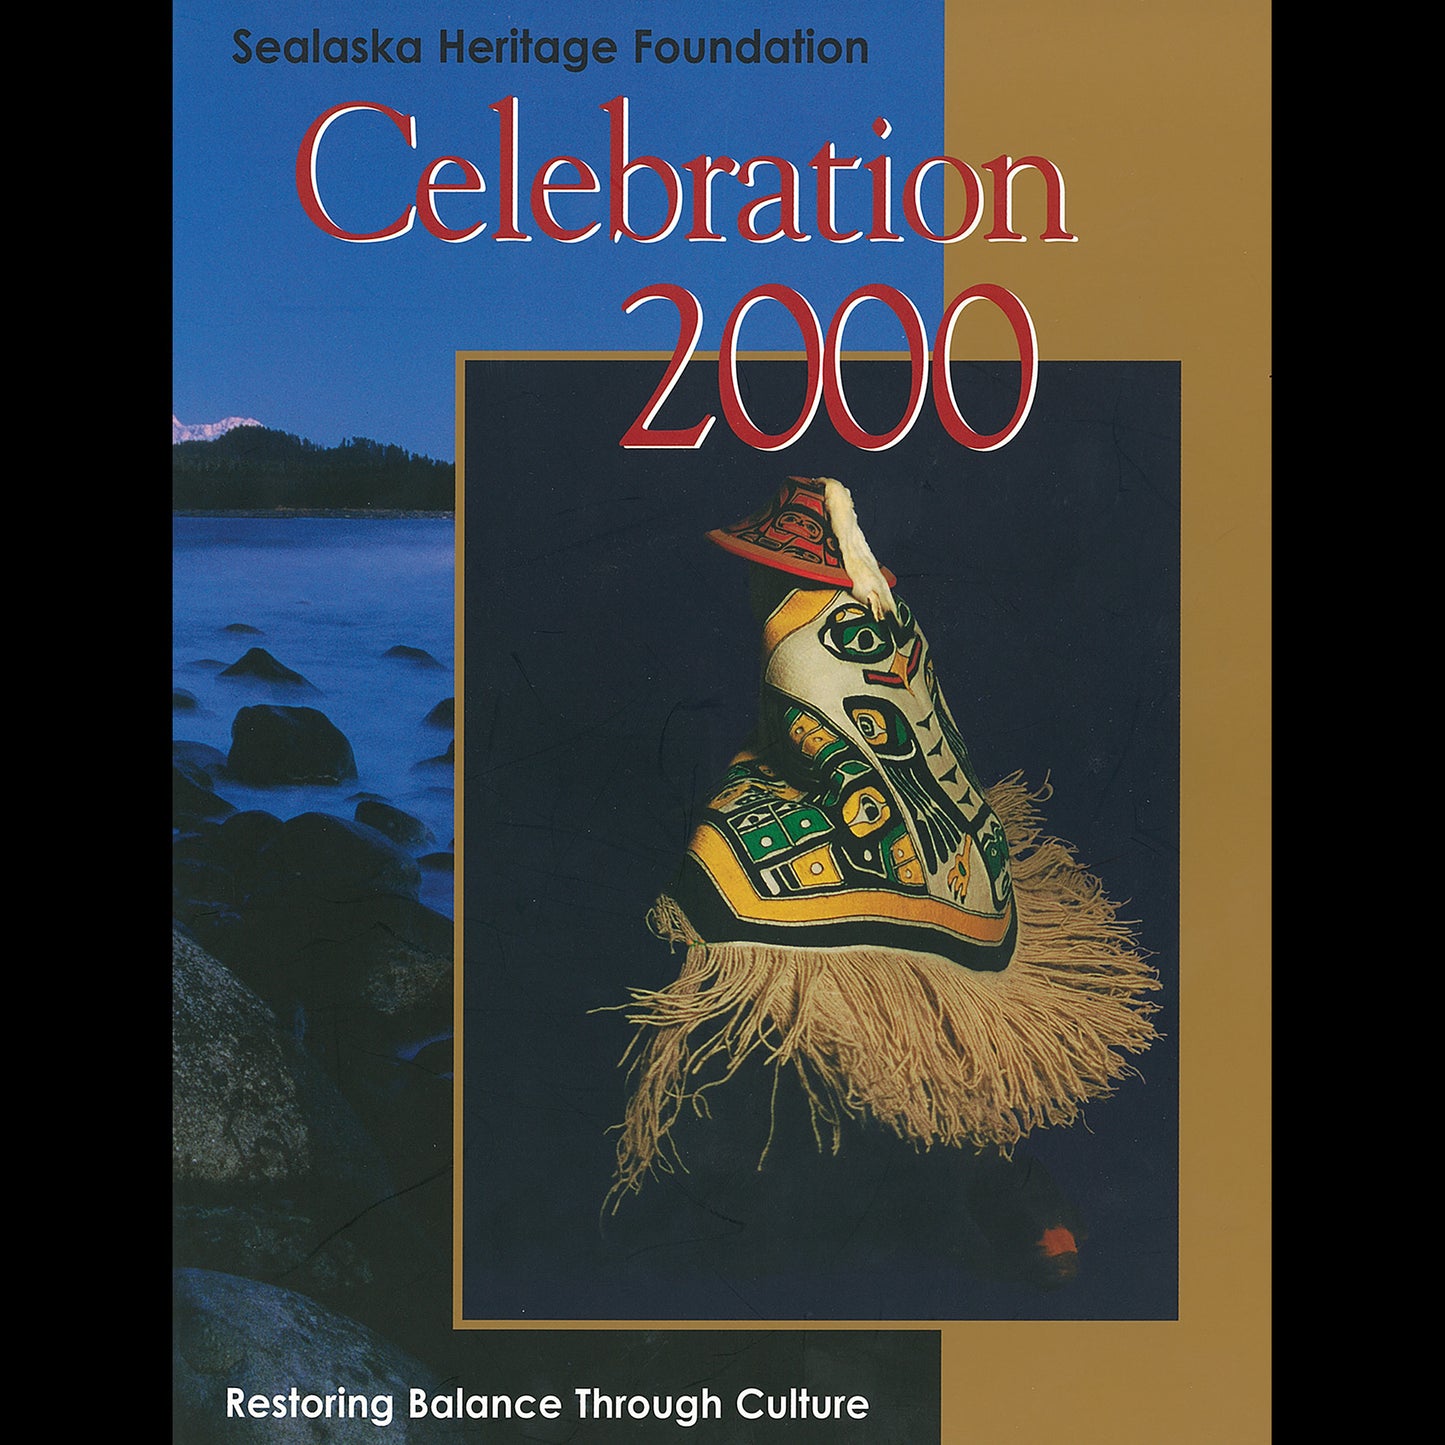 Book - "Celebration 2000: Restoring Balance Through Culture"